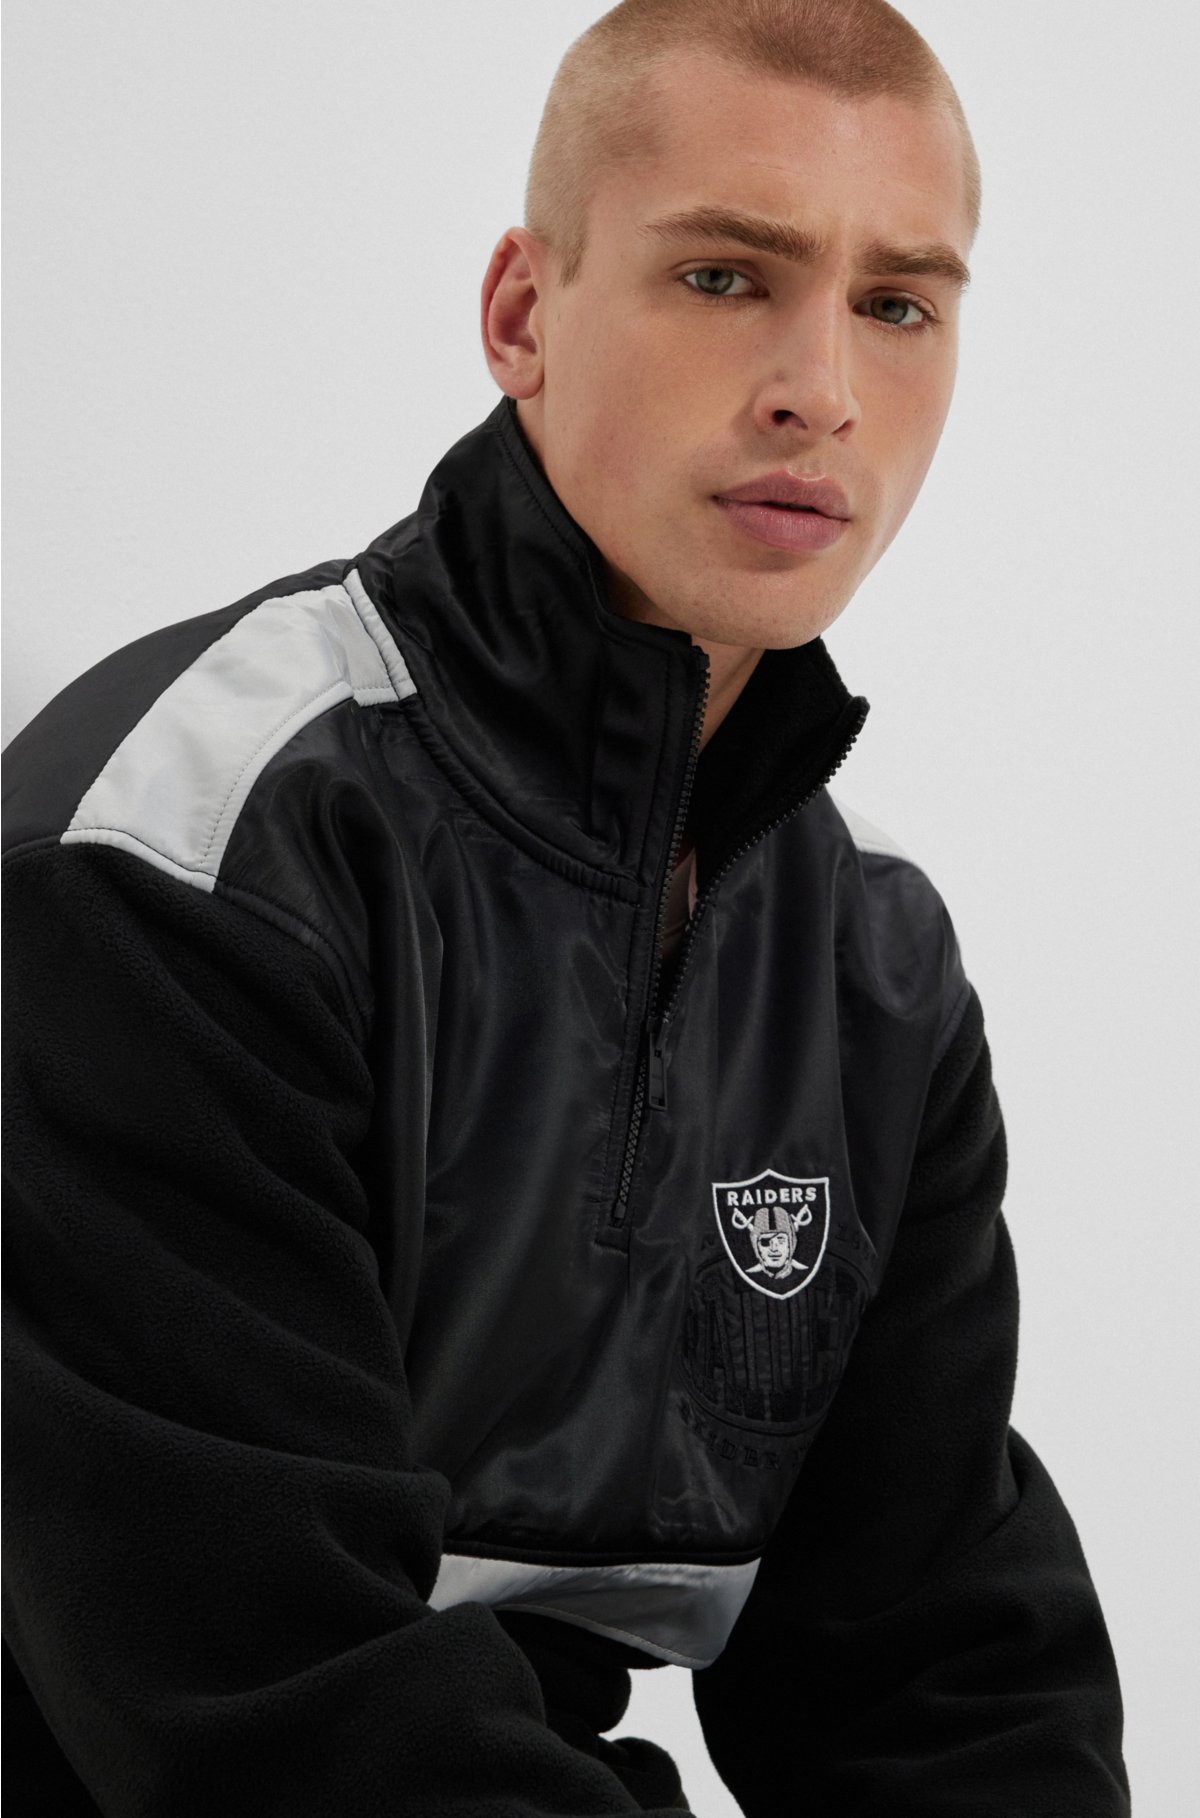  BOSS x NFL zip-neck sweatshirt with collaborative branding, Raiders